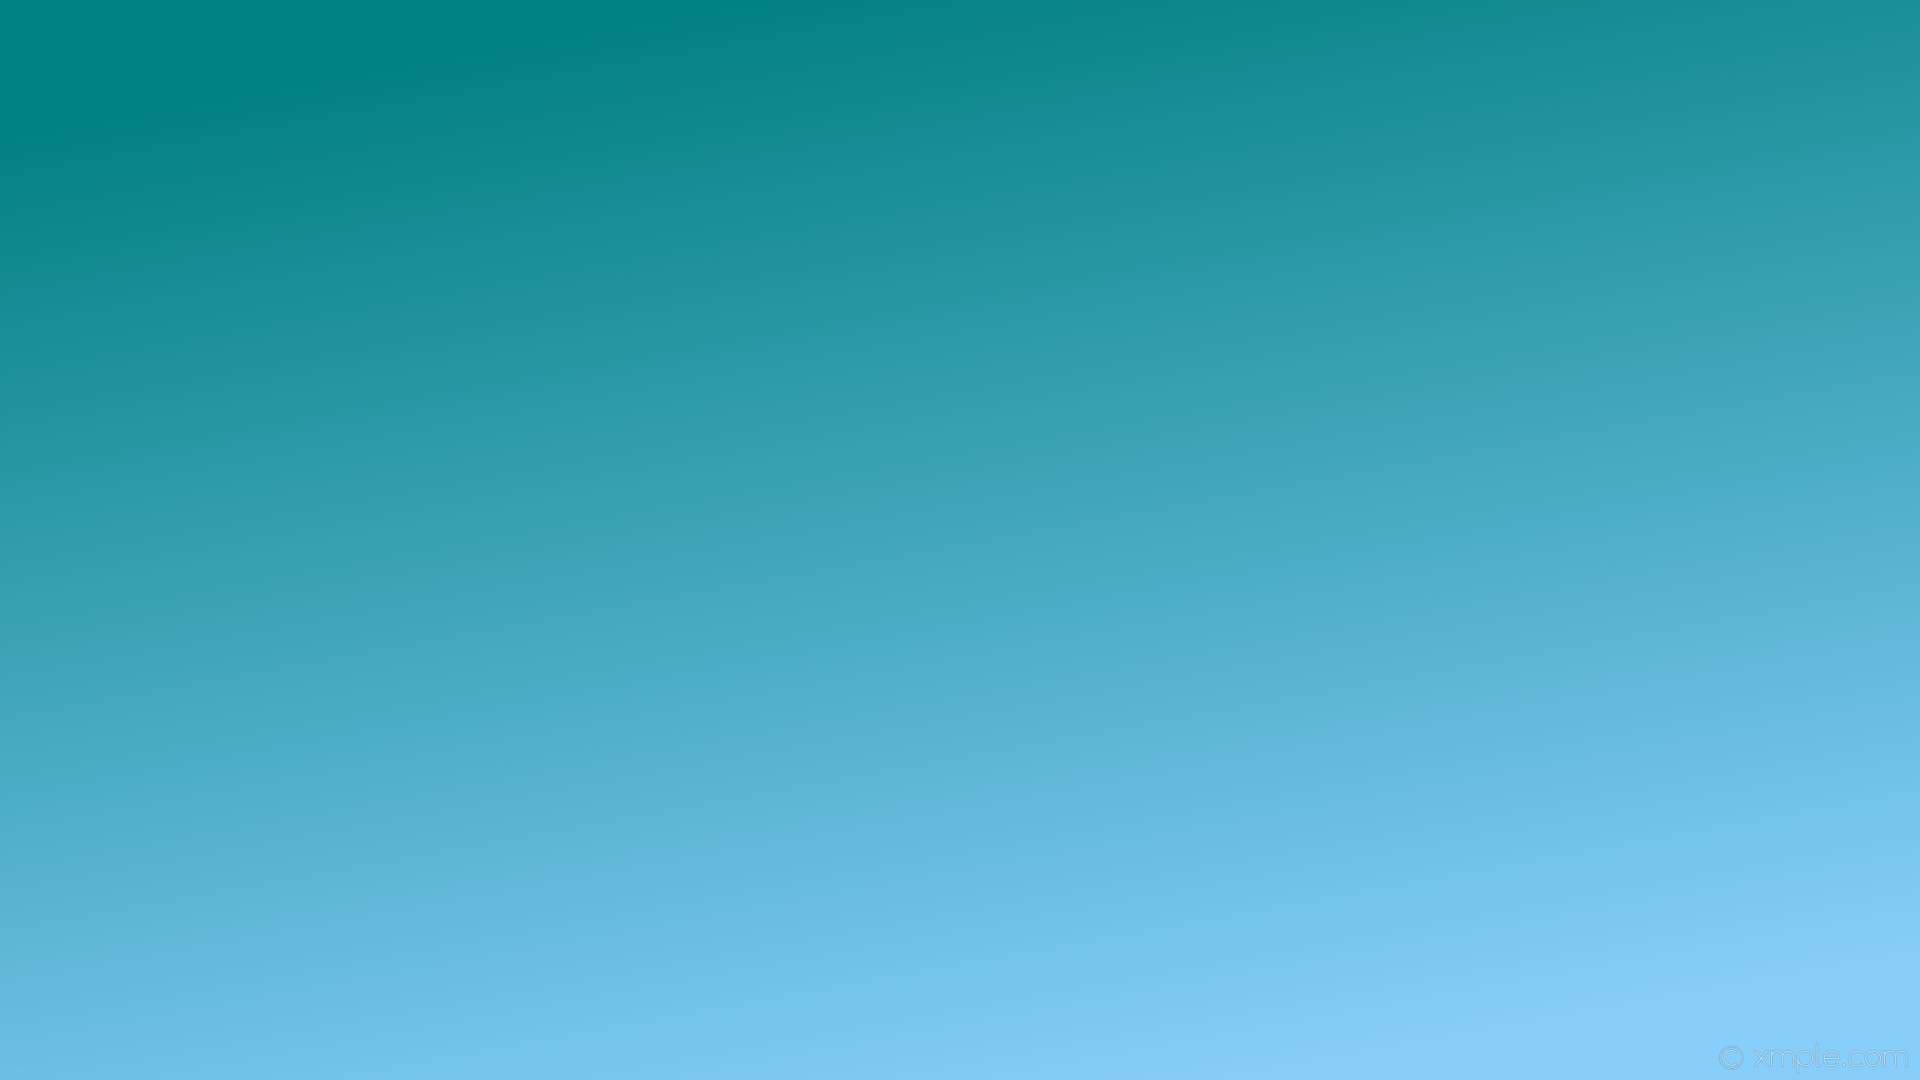 wallpaper gradient blue green linear teal light sky blue #008080 #87cefa  120Â°